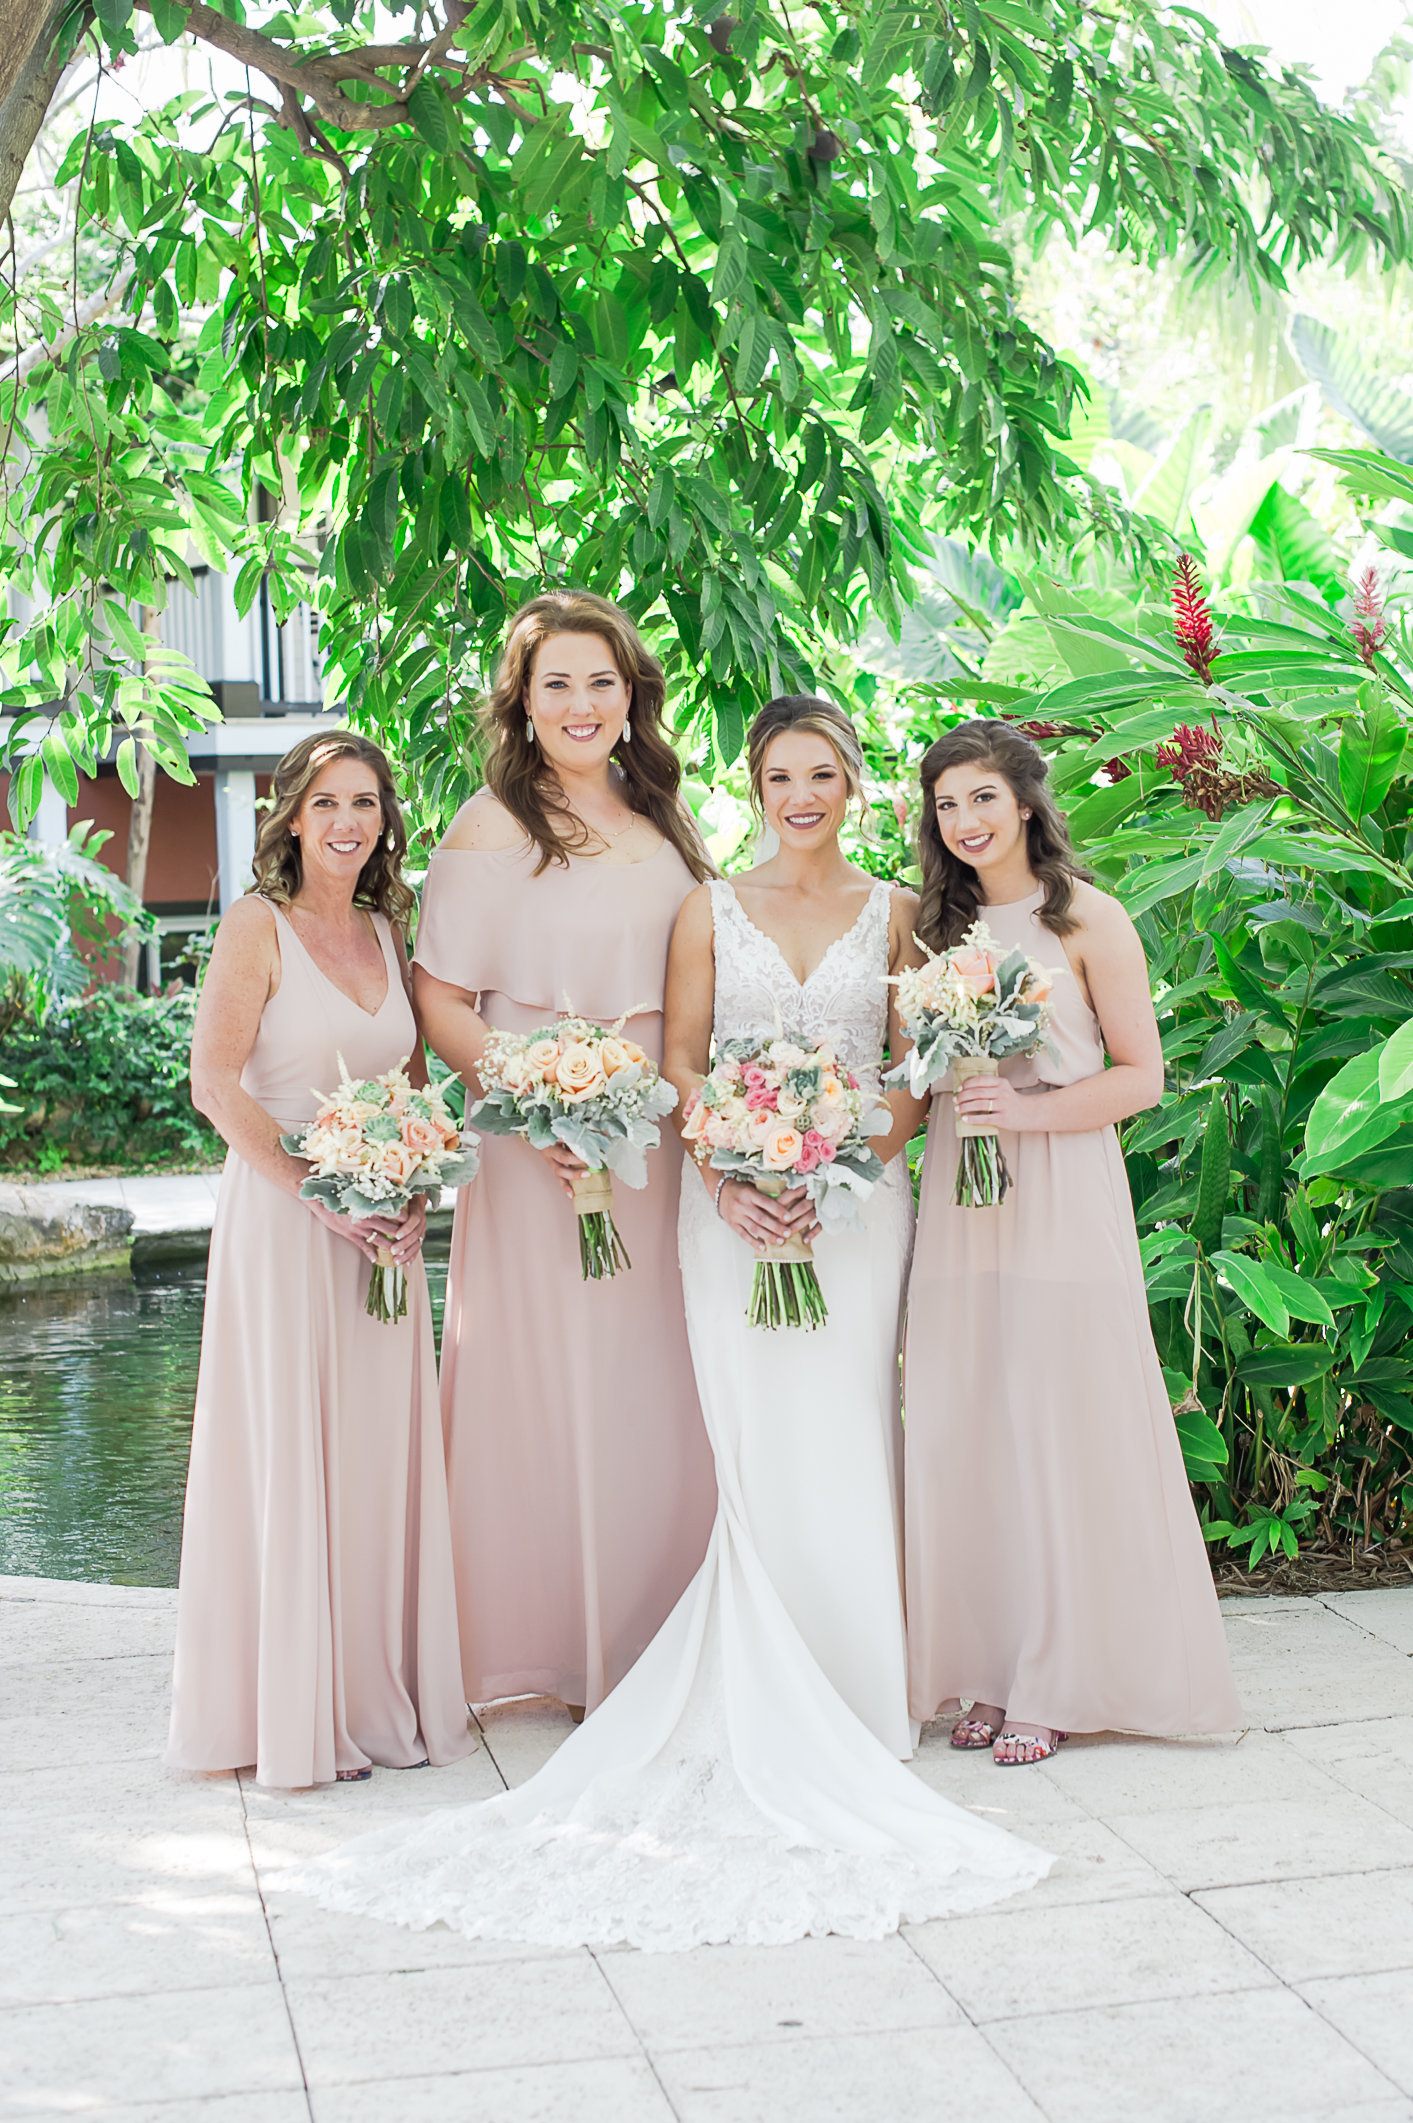 Bridesmaids - Sundy House by Palm Beach Photography, Inc.